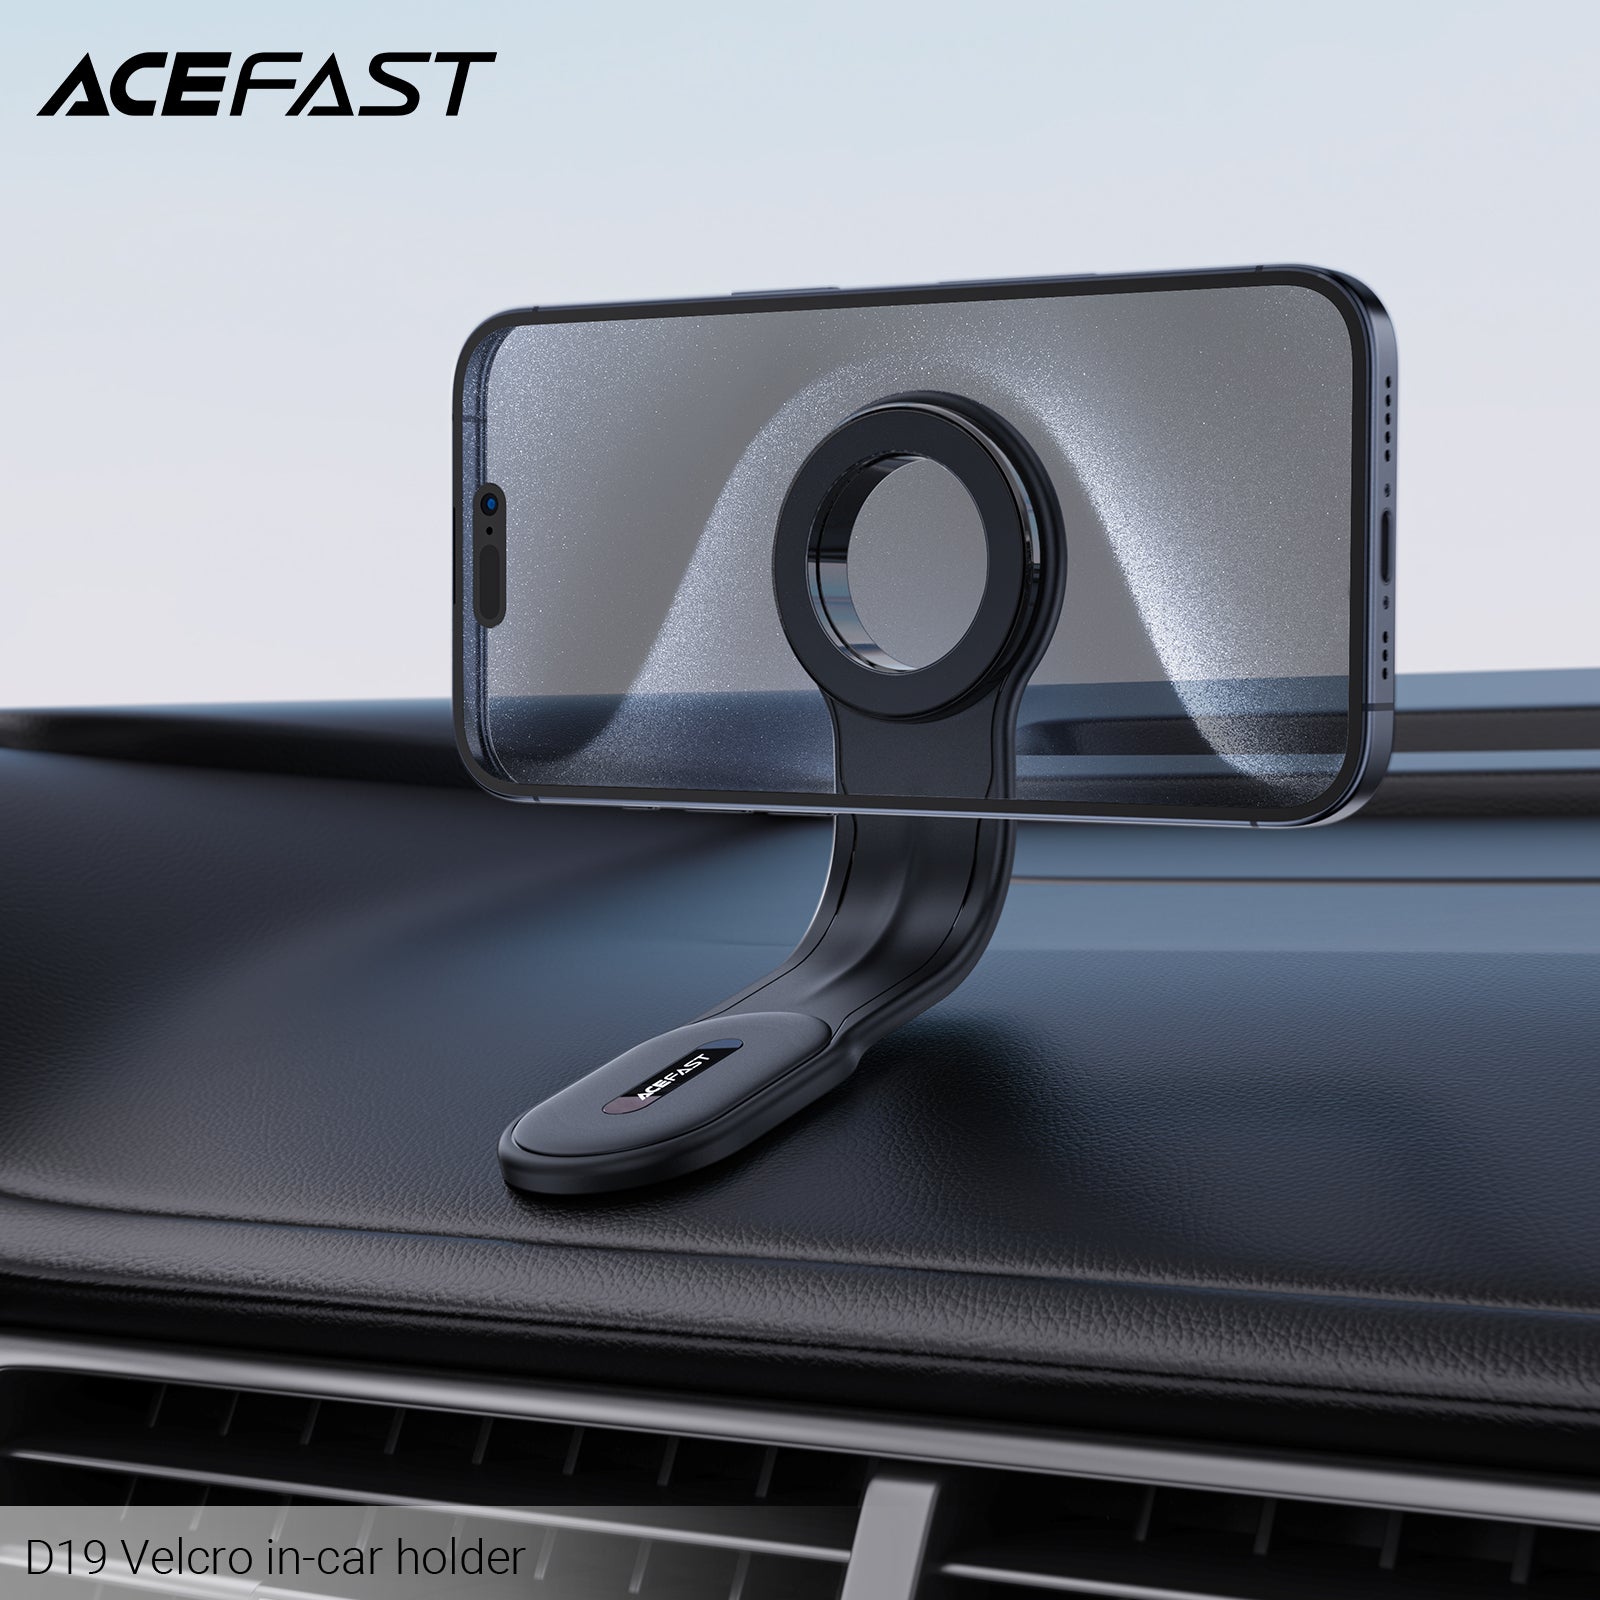 ACEFAST D19 Velcro in-car holder